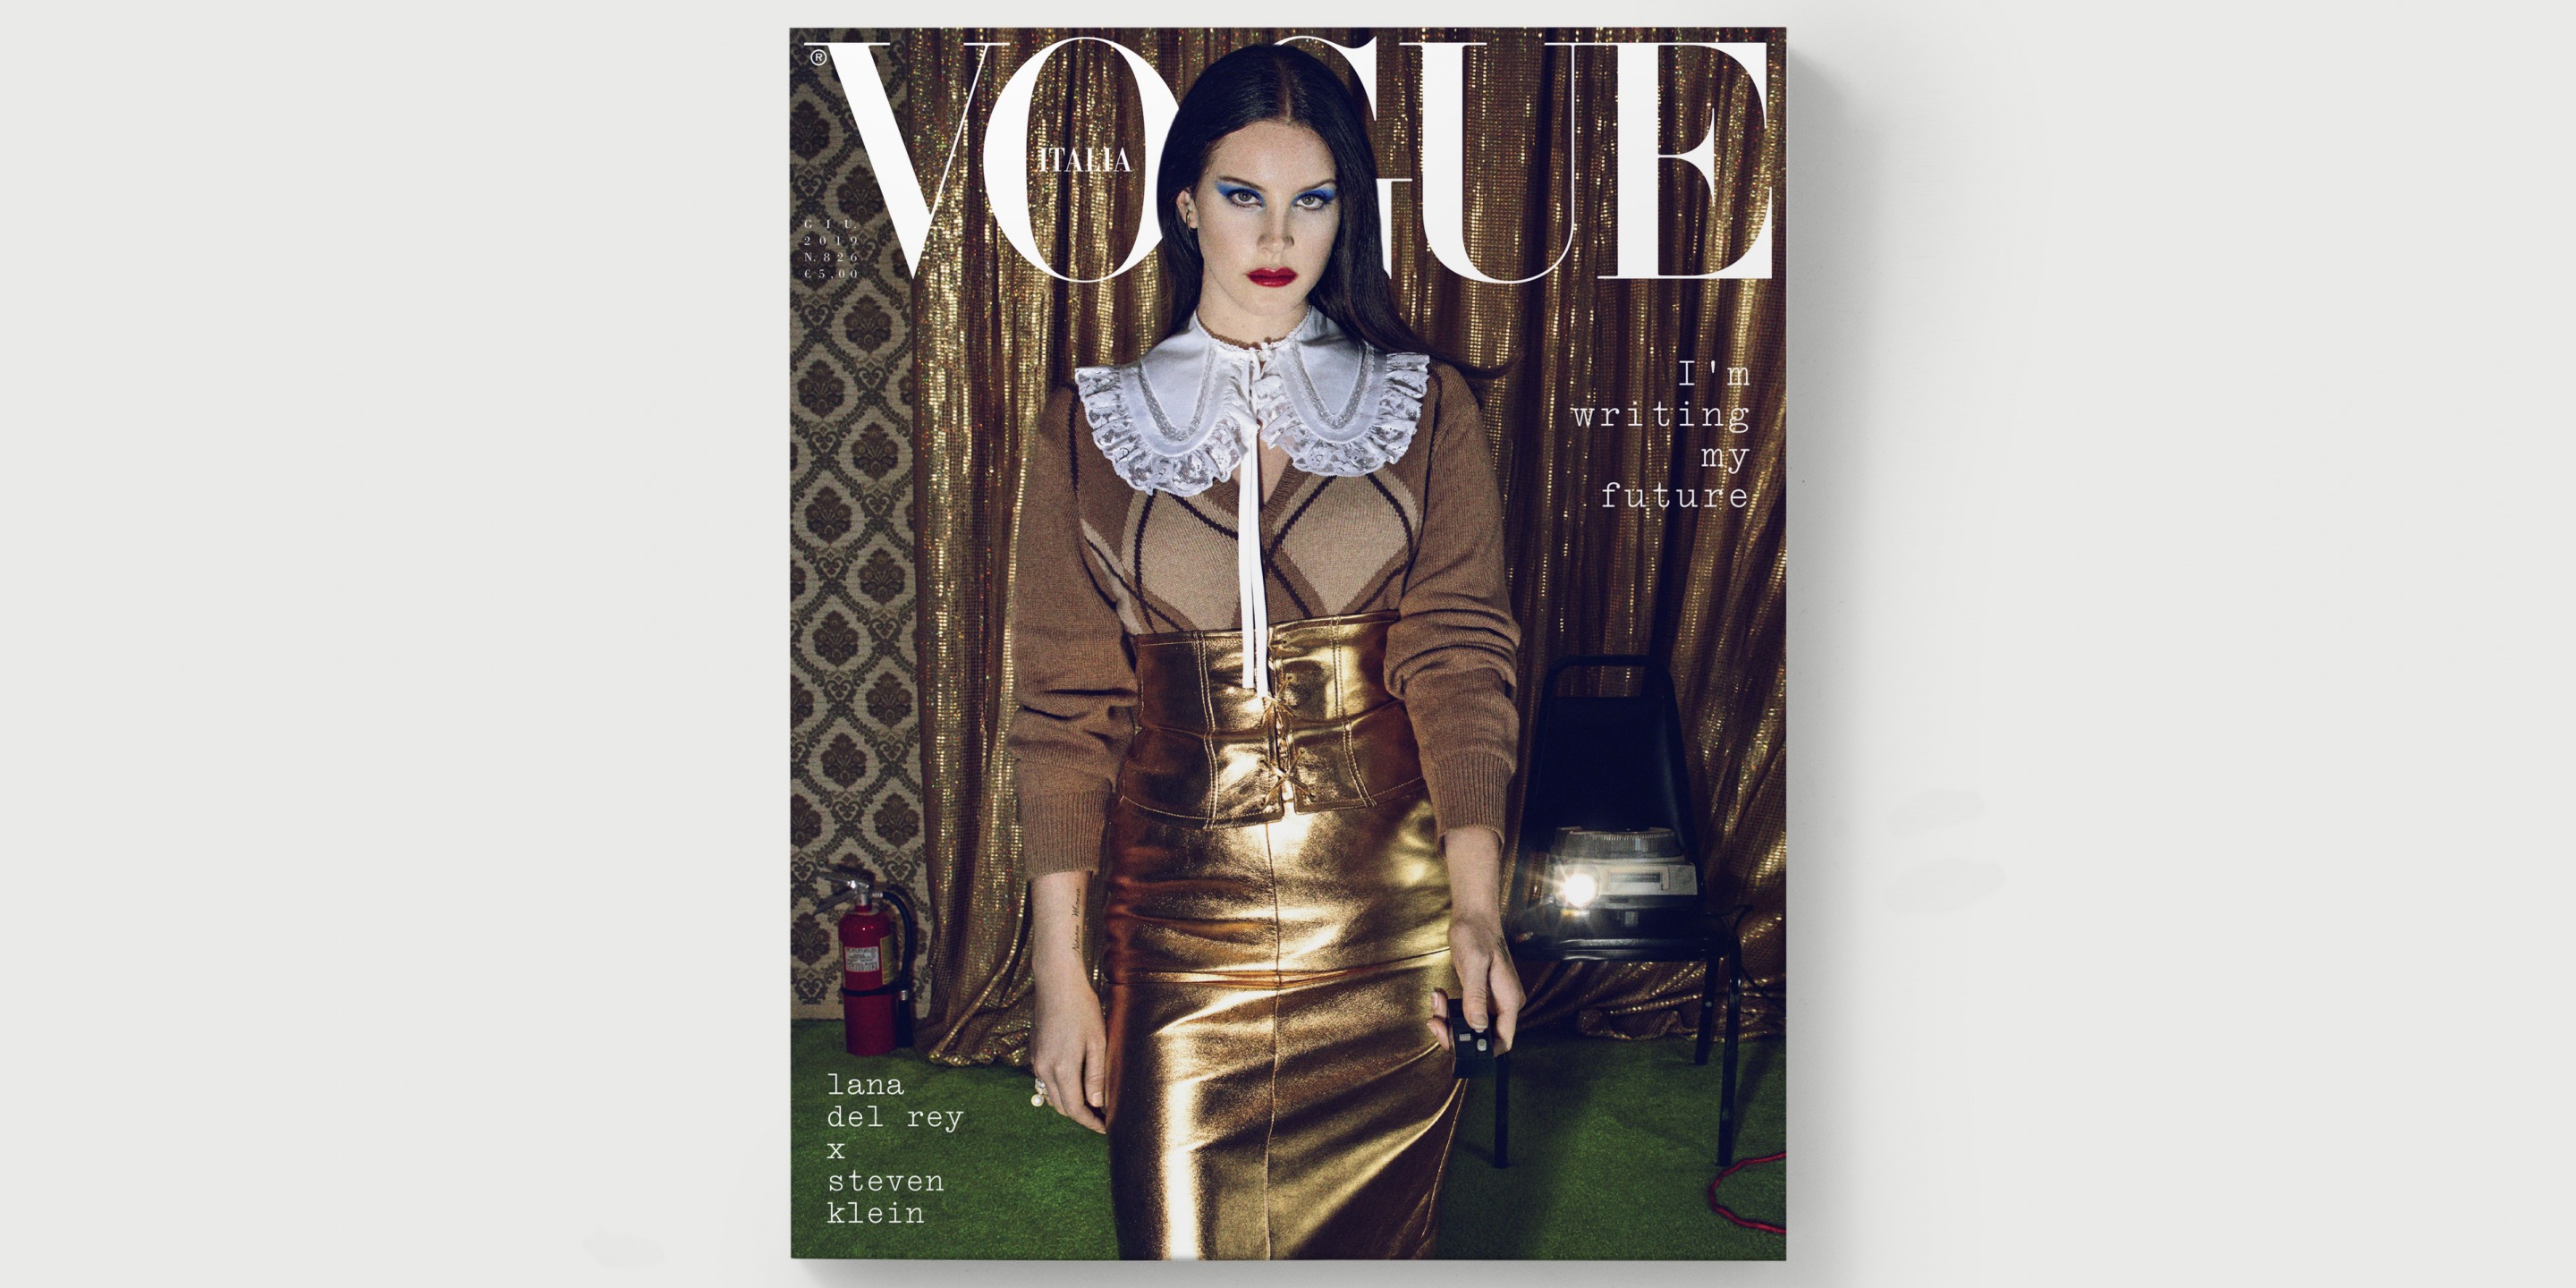 GB65 | Vogue Italia: June 2019, Steven Klein